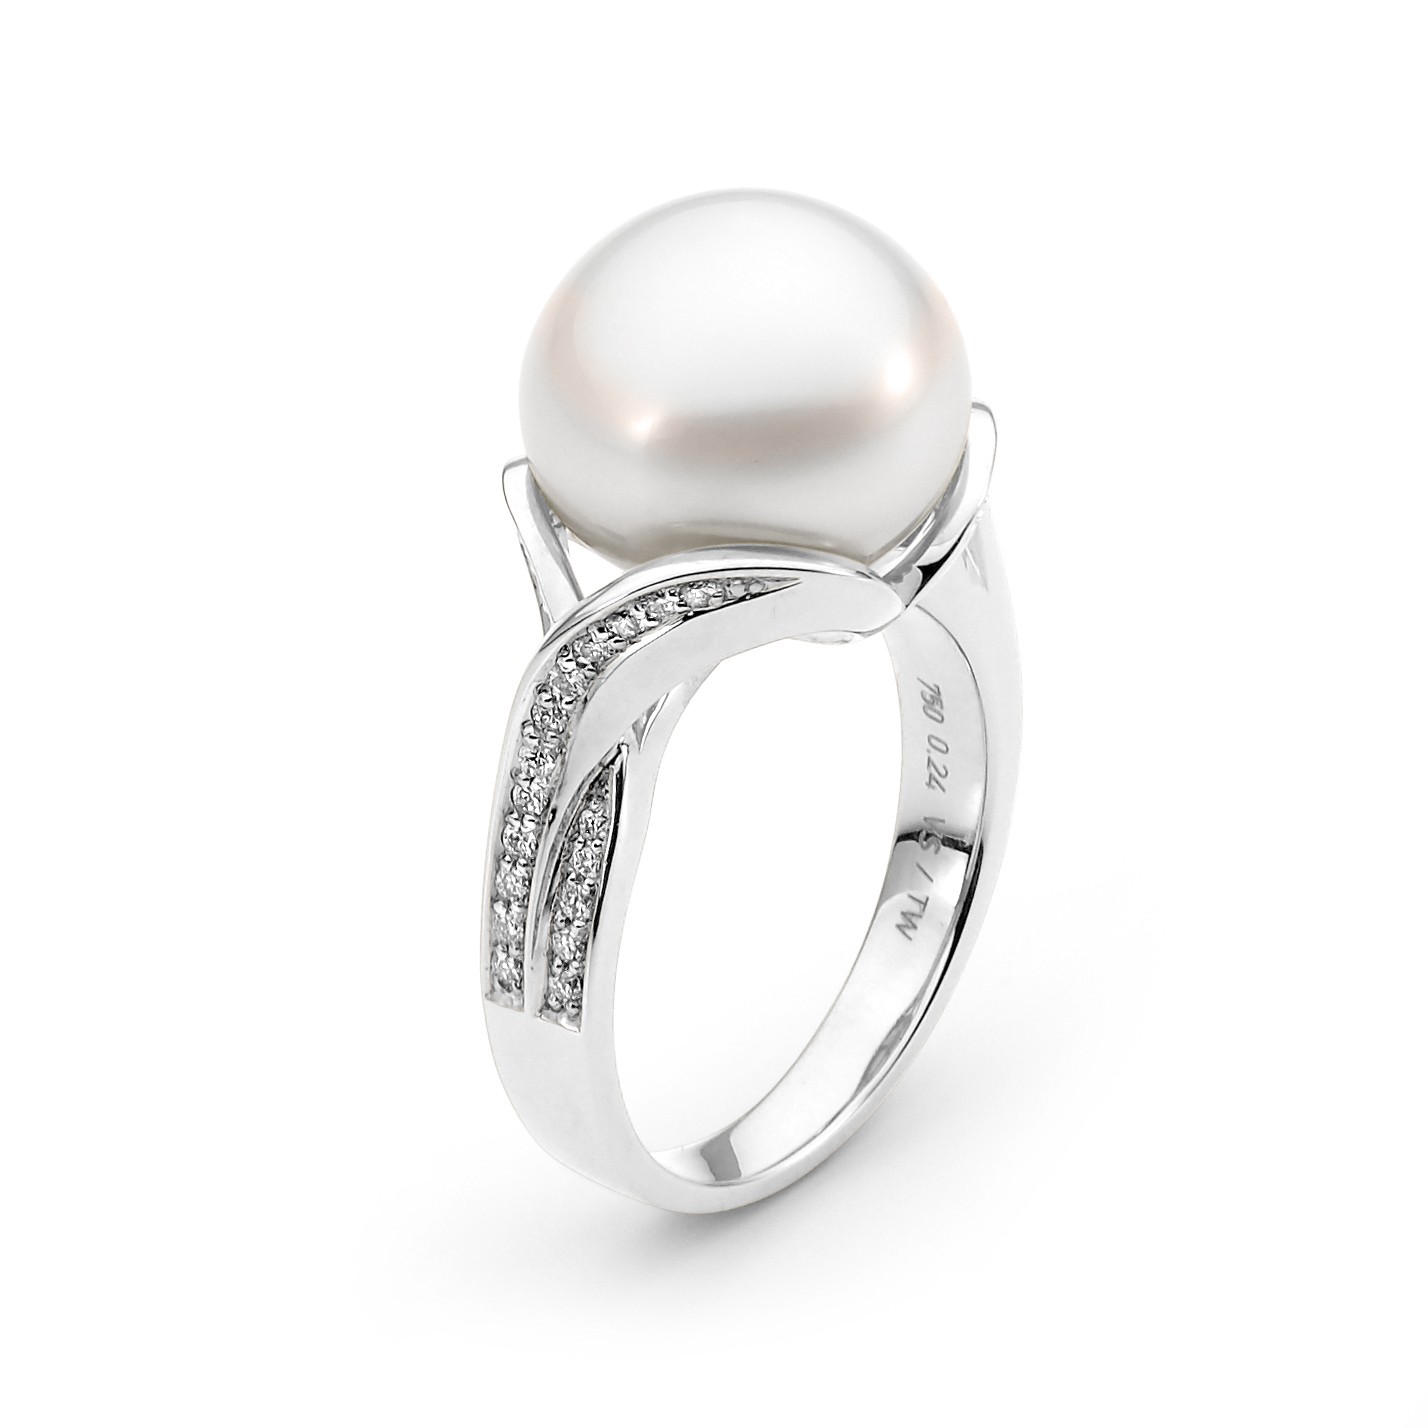 Grain Set Diamond and Pearl Ring - Allure South Sea Pearls